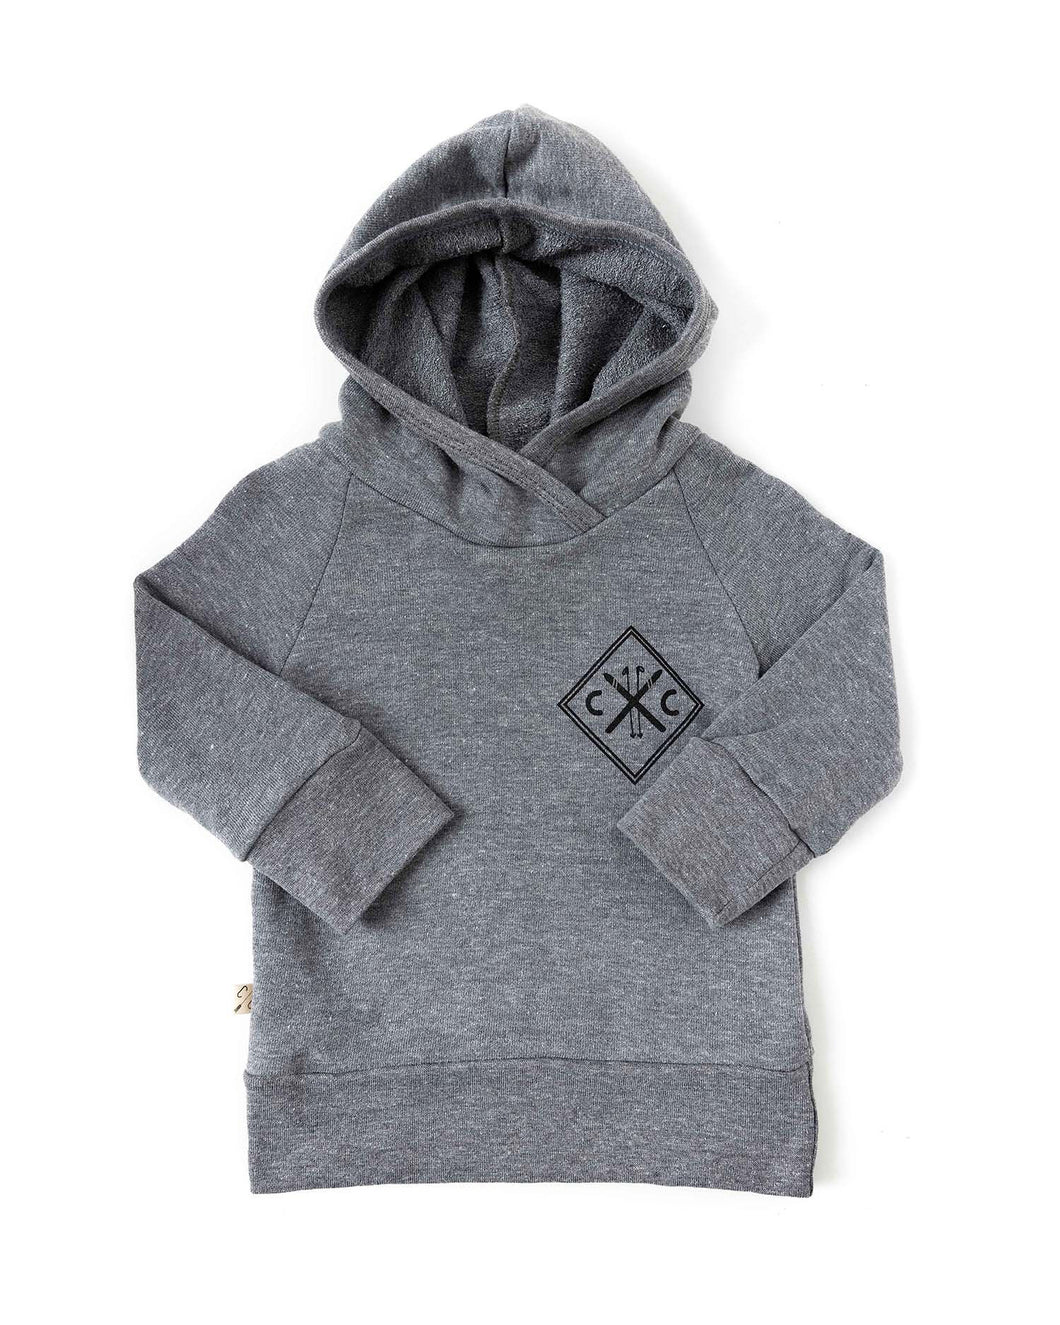 trademark raglan hoodie - ski team on athletic gray